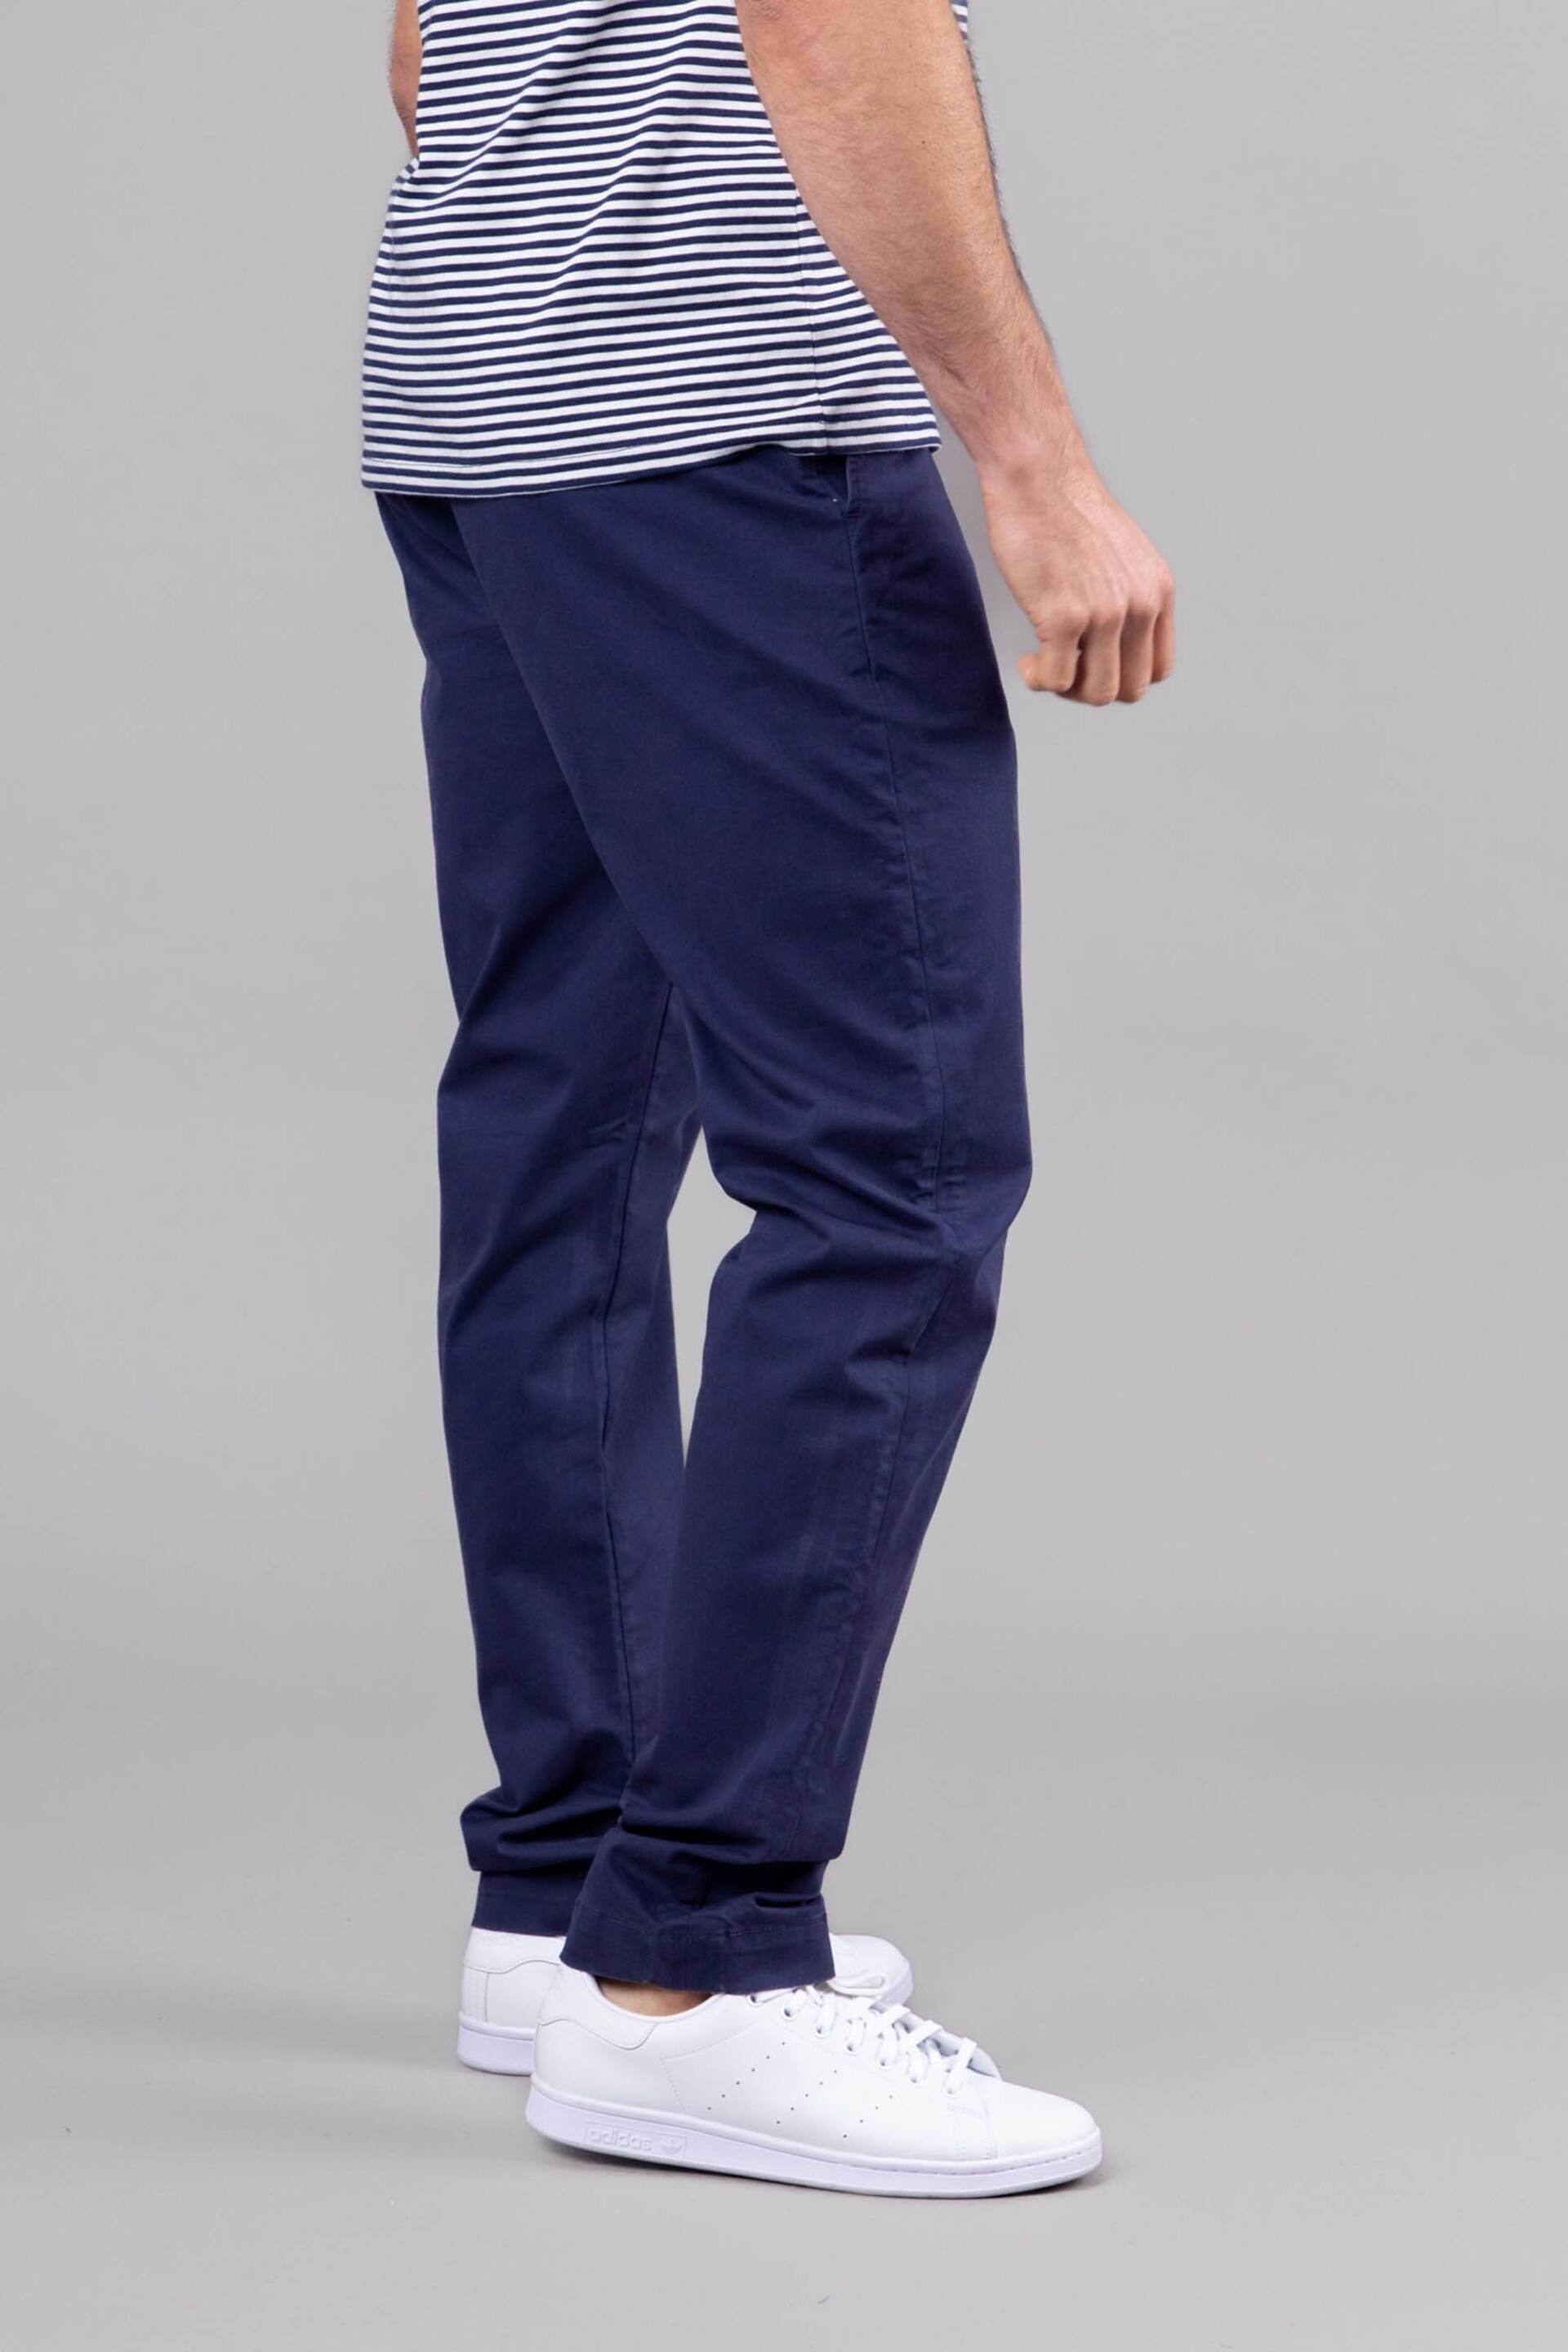 Lakeland Clothing Blue Noel Cotton Chinos Trousers - Image 2 of 5